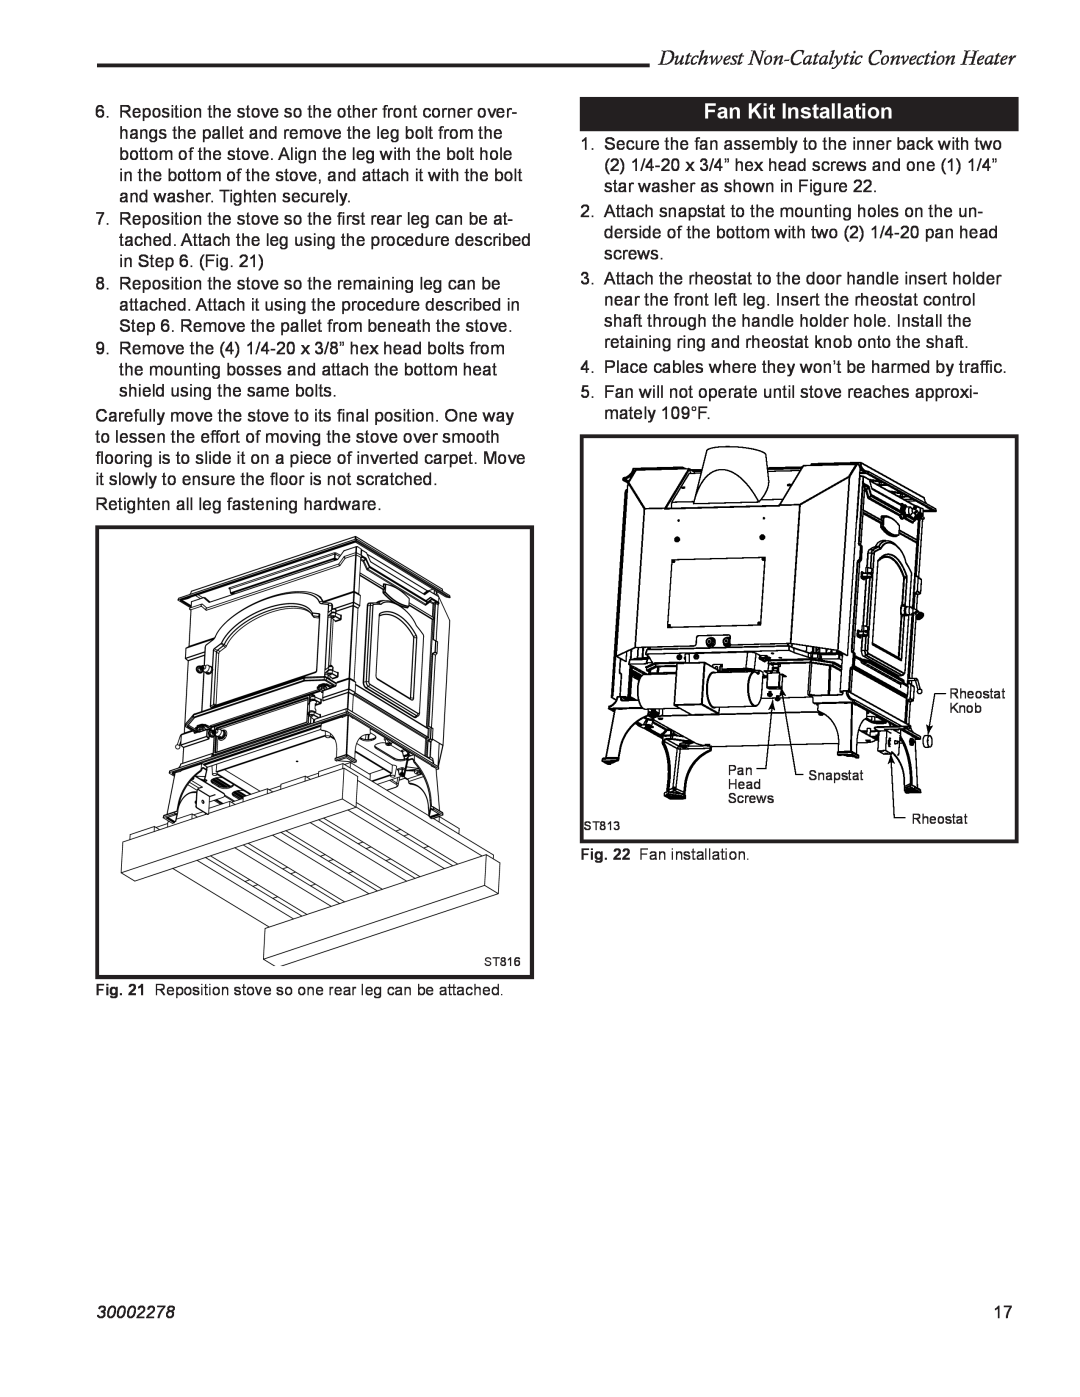 Vermont Casting 2478 manual Fan Kit Installation, Dutchwest Non-CatalyticConvection Heater, 30002278 